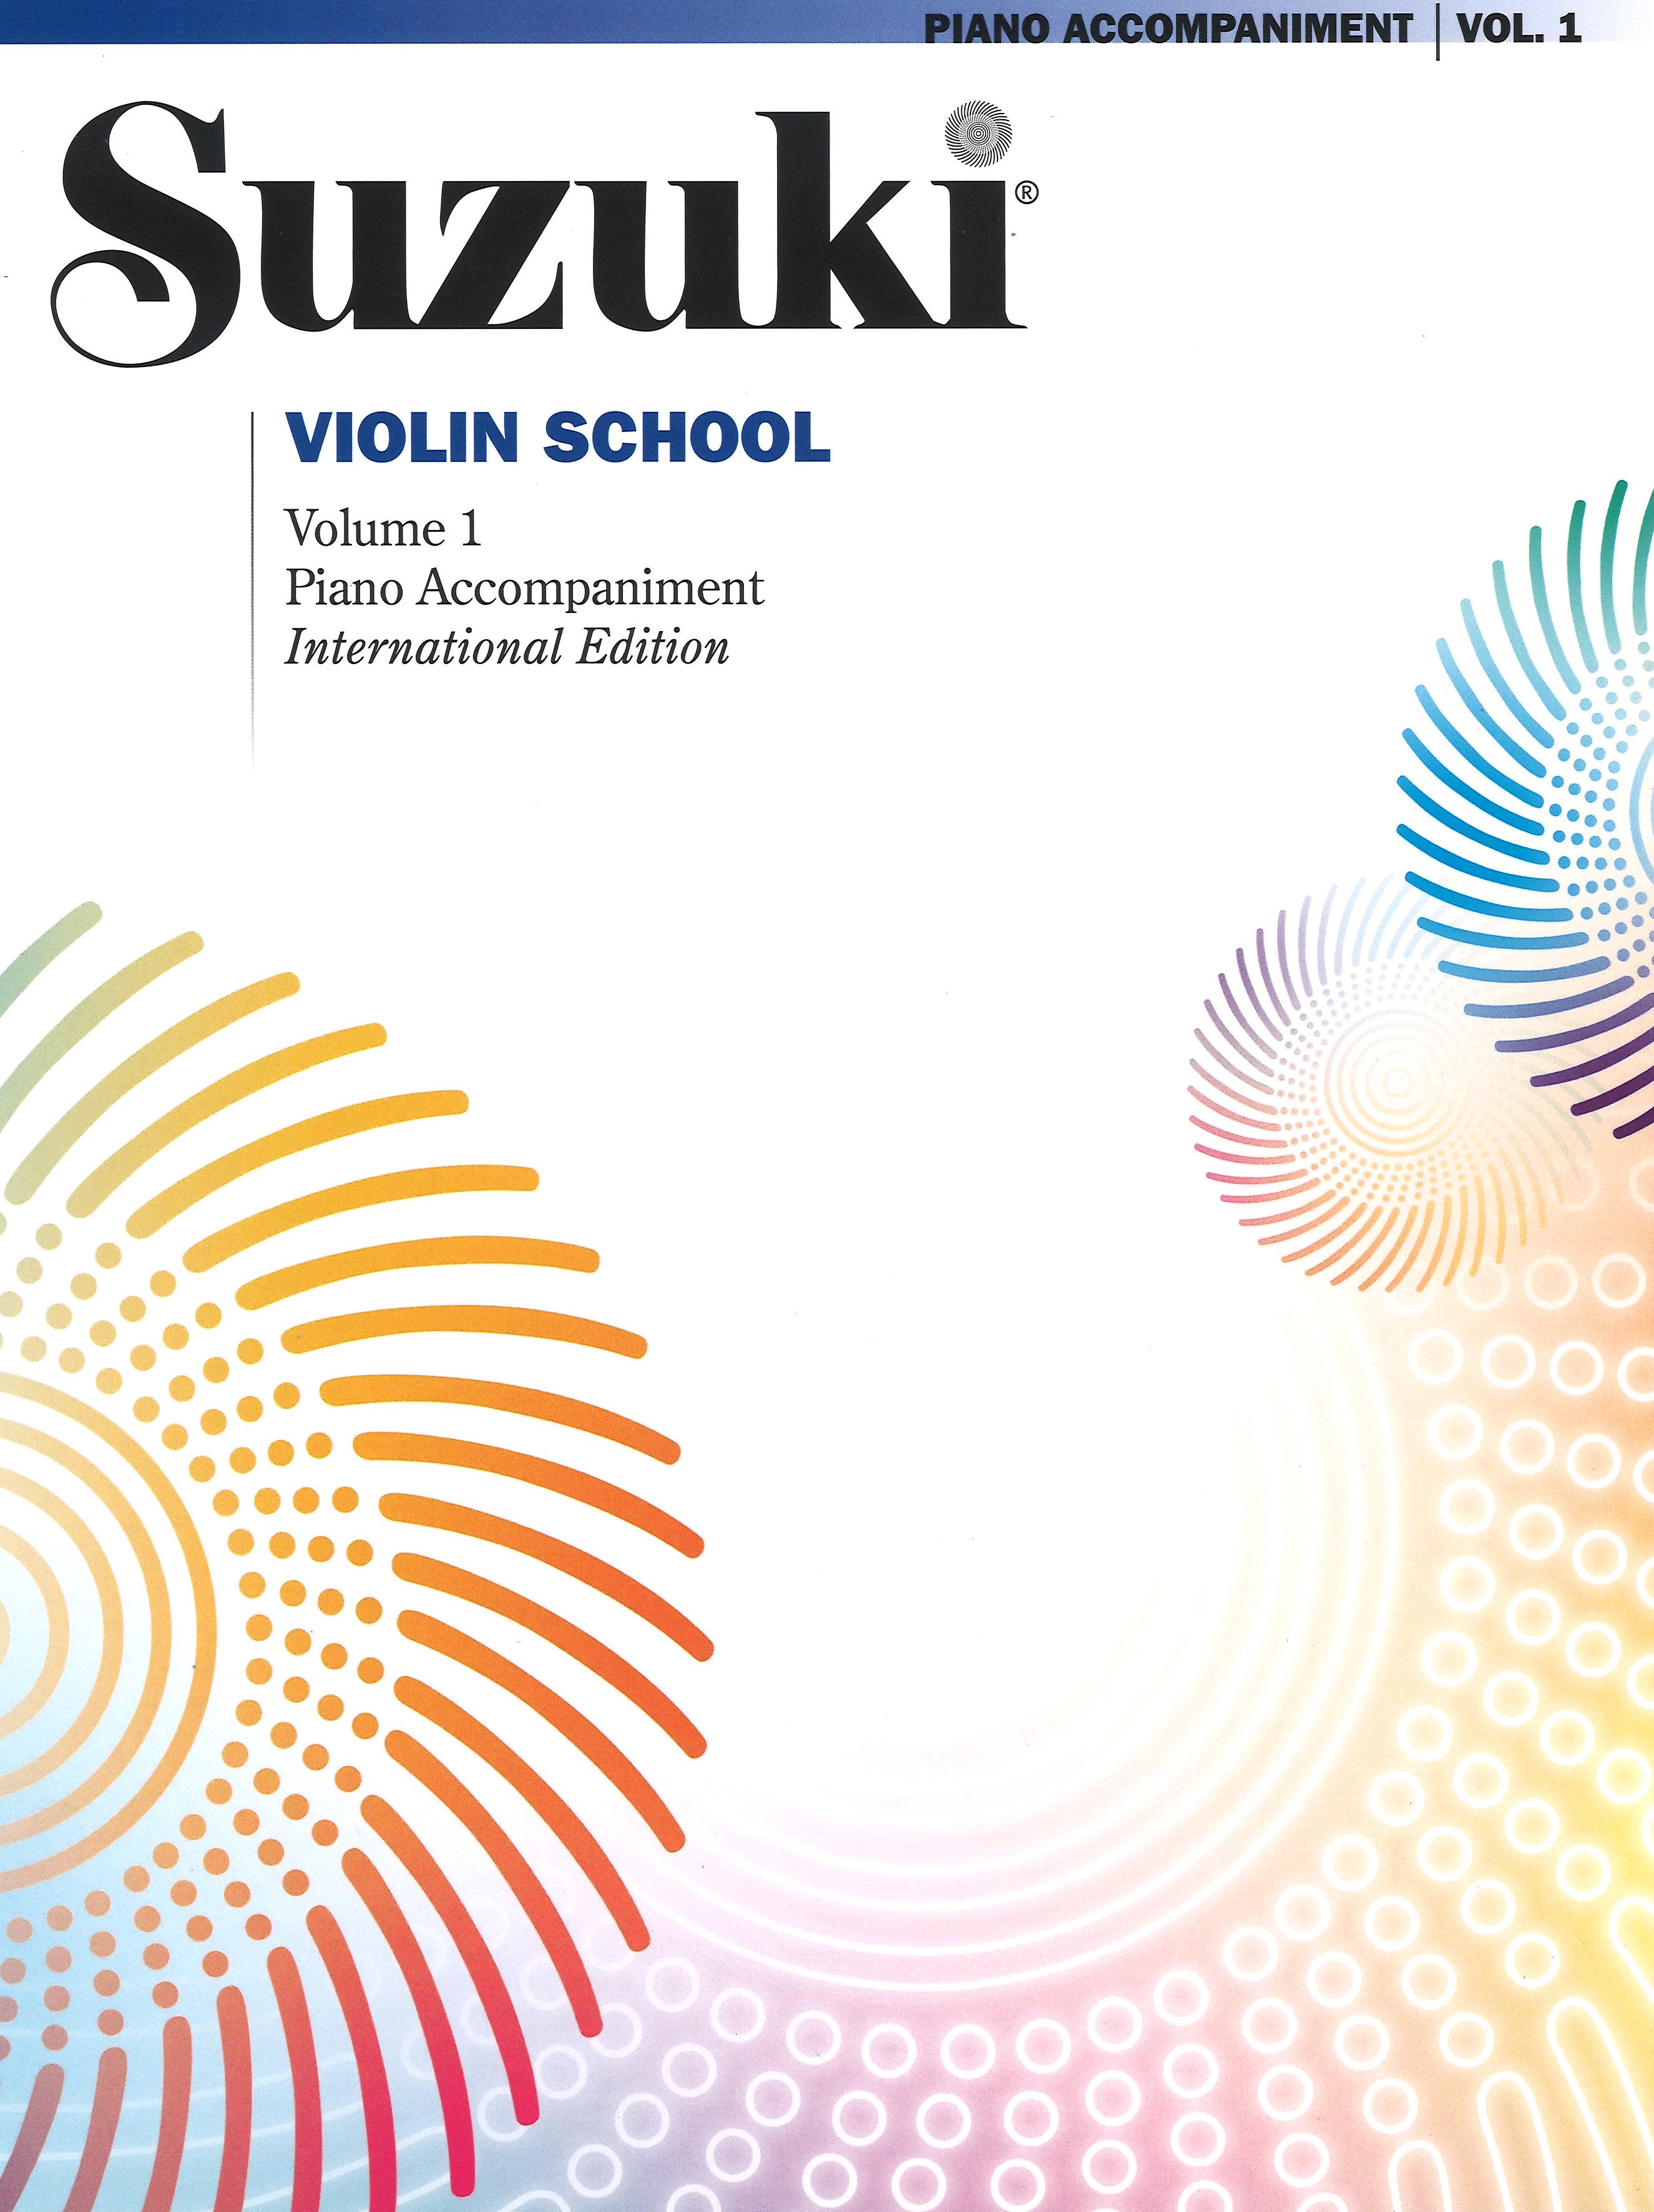 Suzuki Violin School Vol 1 Piano Accomp Int Ed Sheet Music Songbook